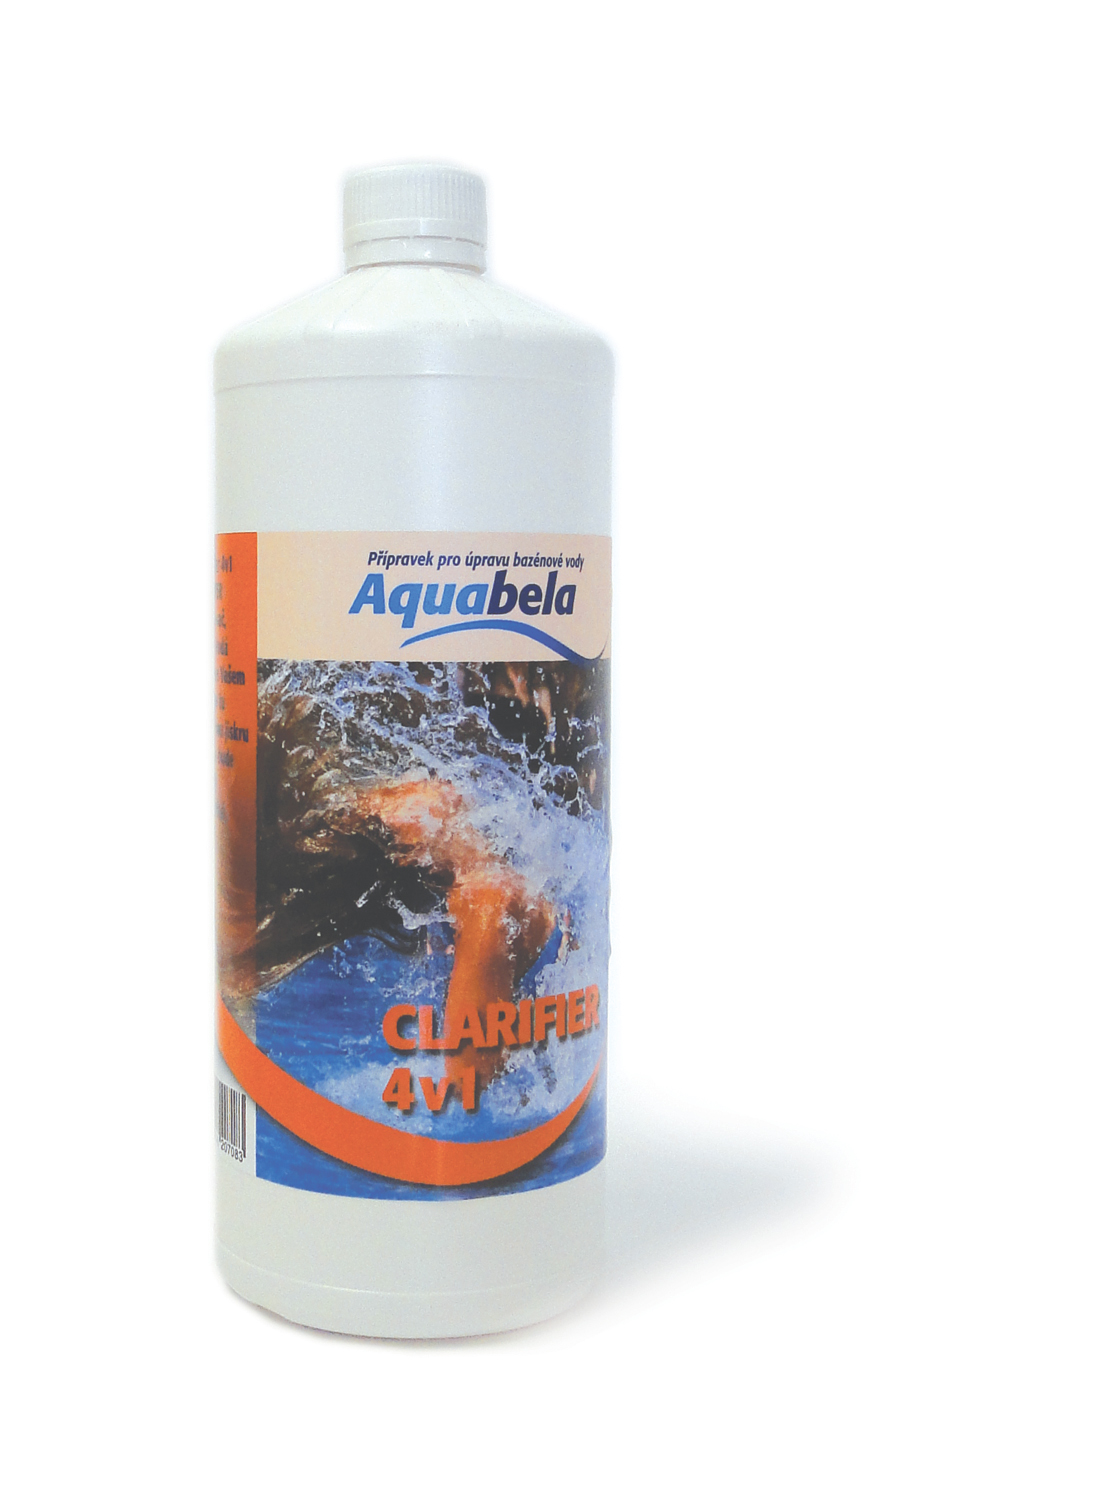 Aquabela Clarifier 4v1 - lahev 1l